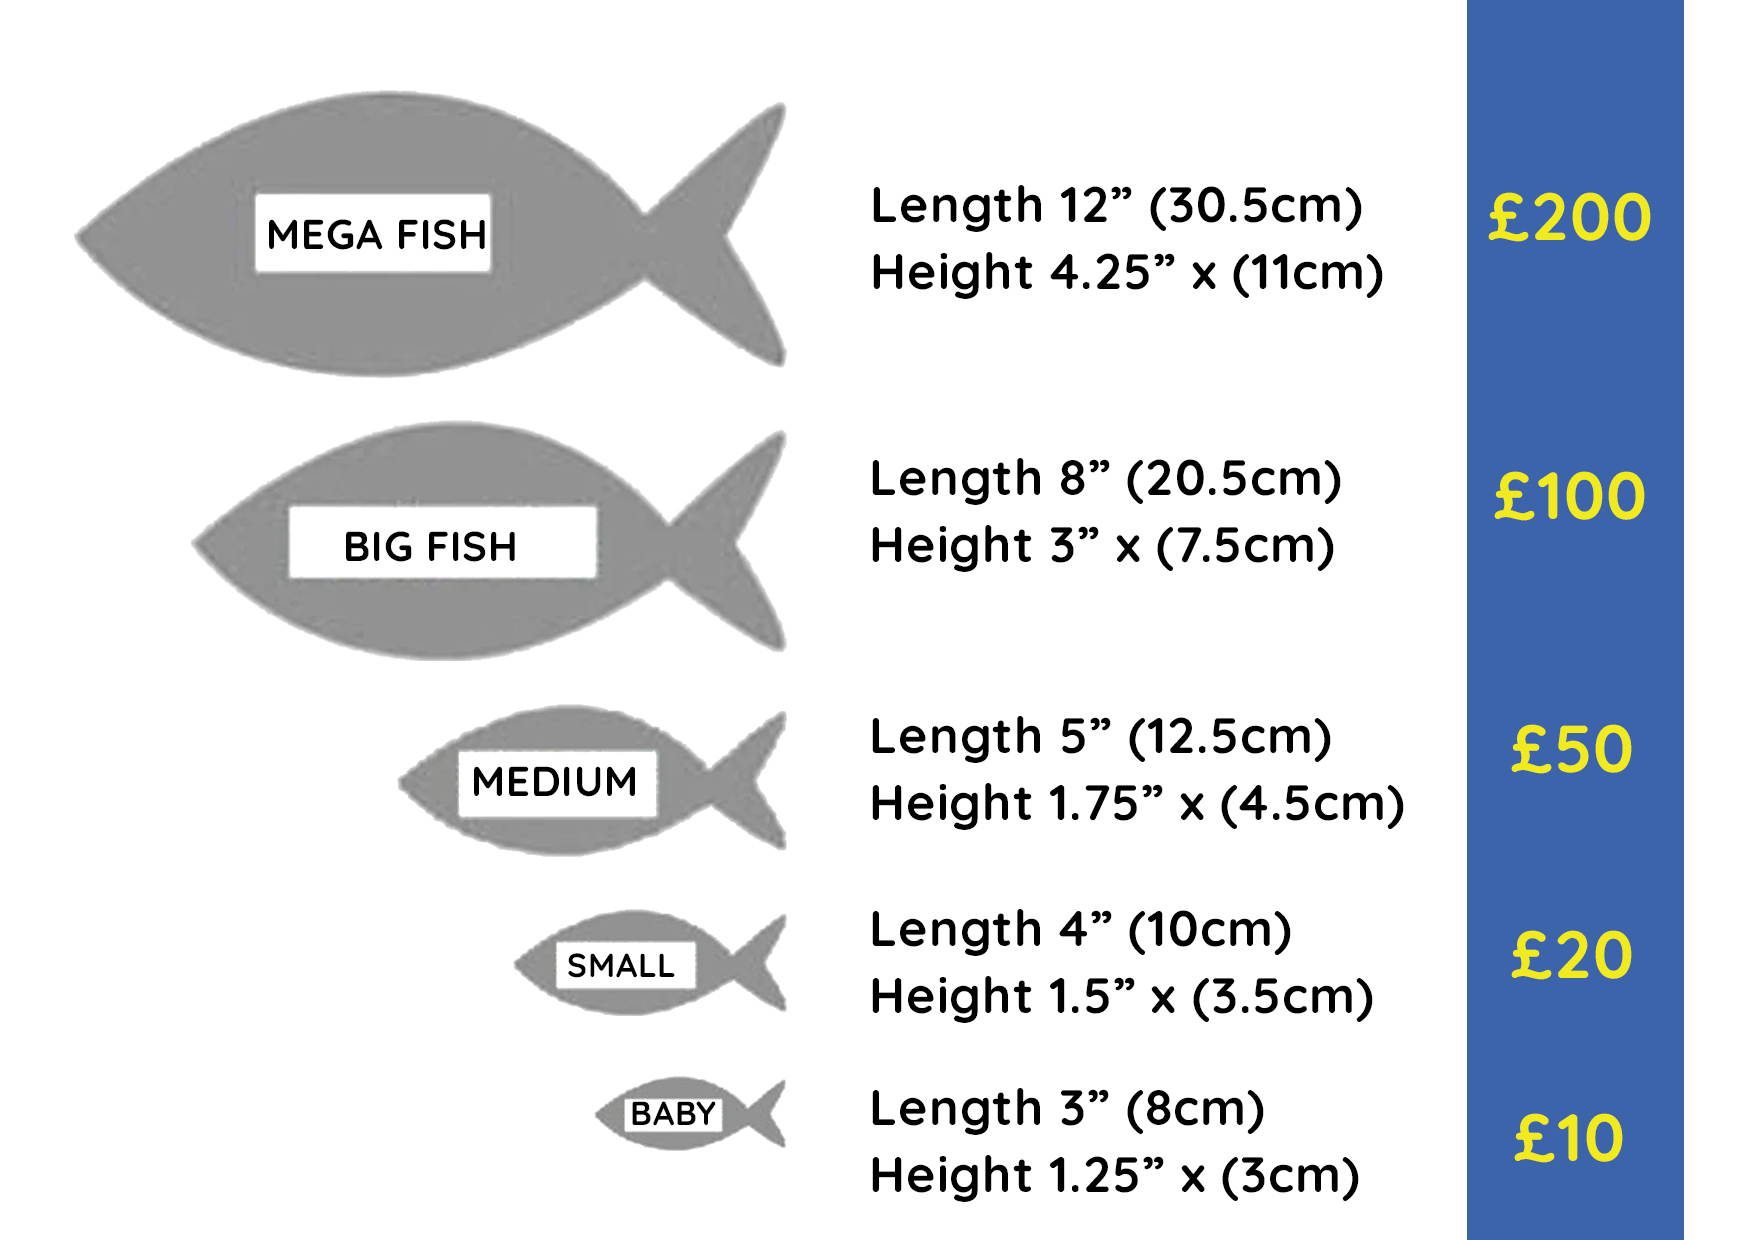 1676480309_fish_sizes.jpg